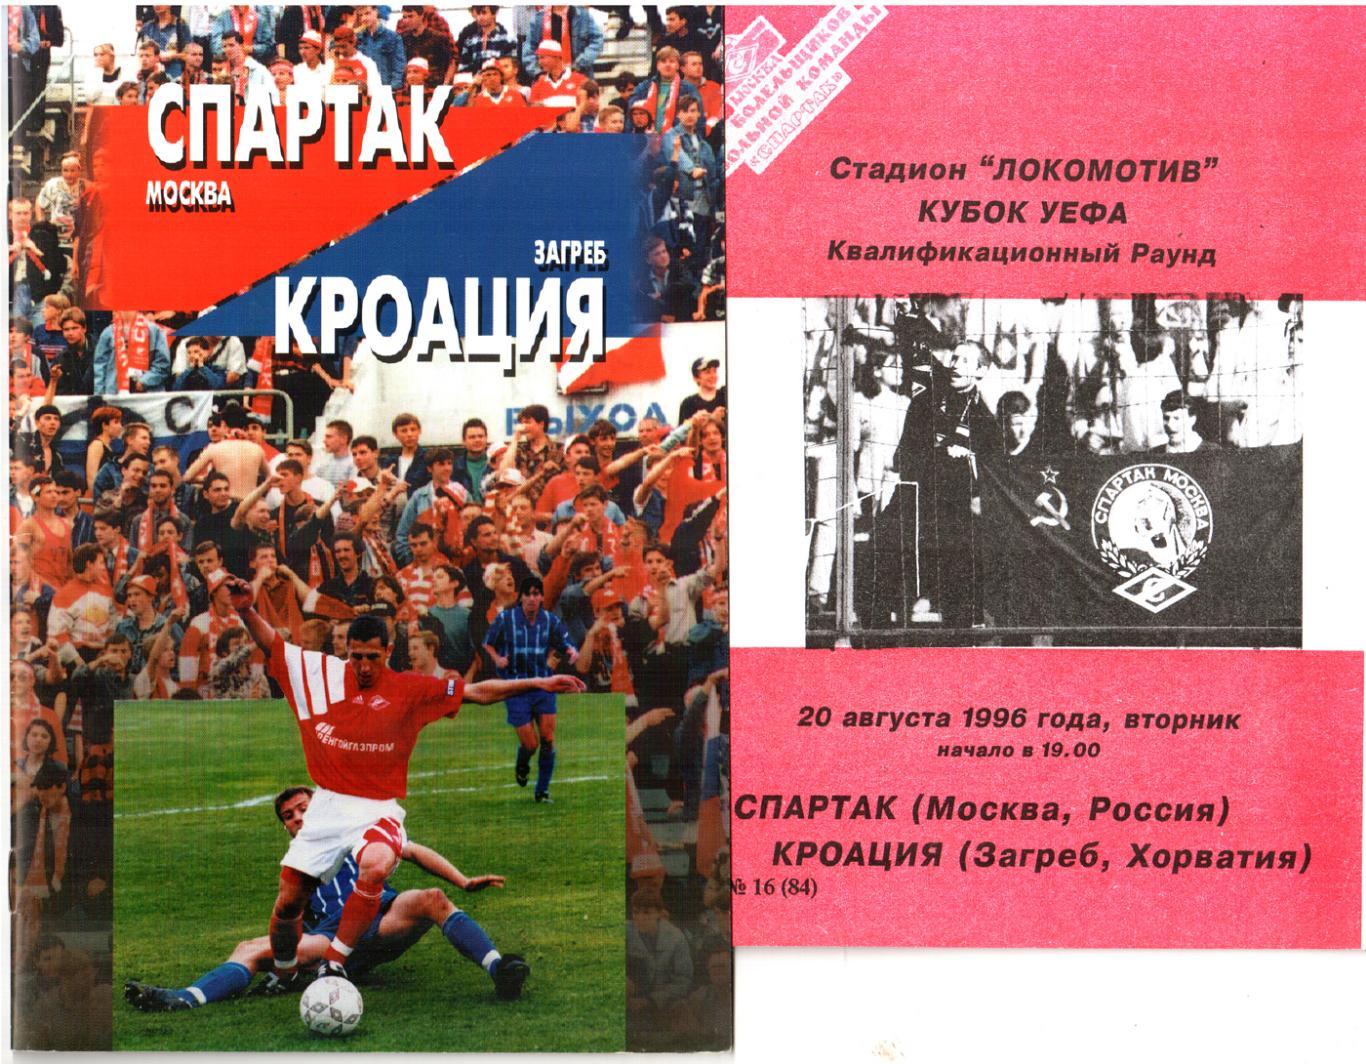 Спартак (Москва) - Кроация (Загреб) 1996 Кубок УЕФА. 2 вида